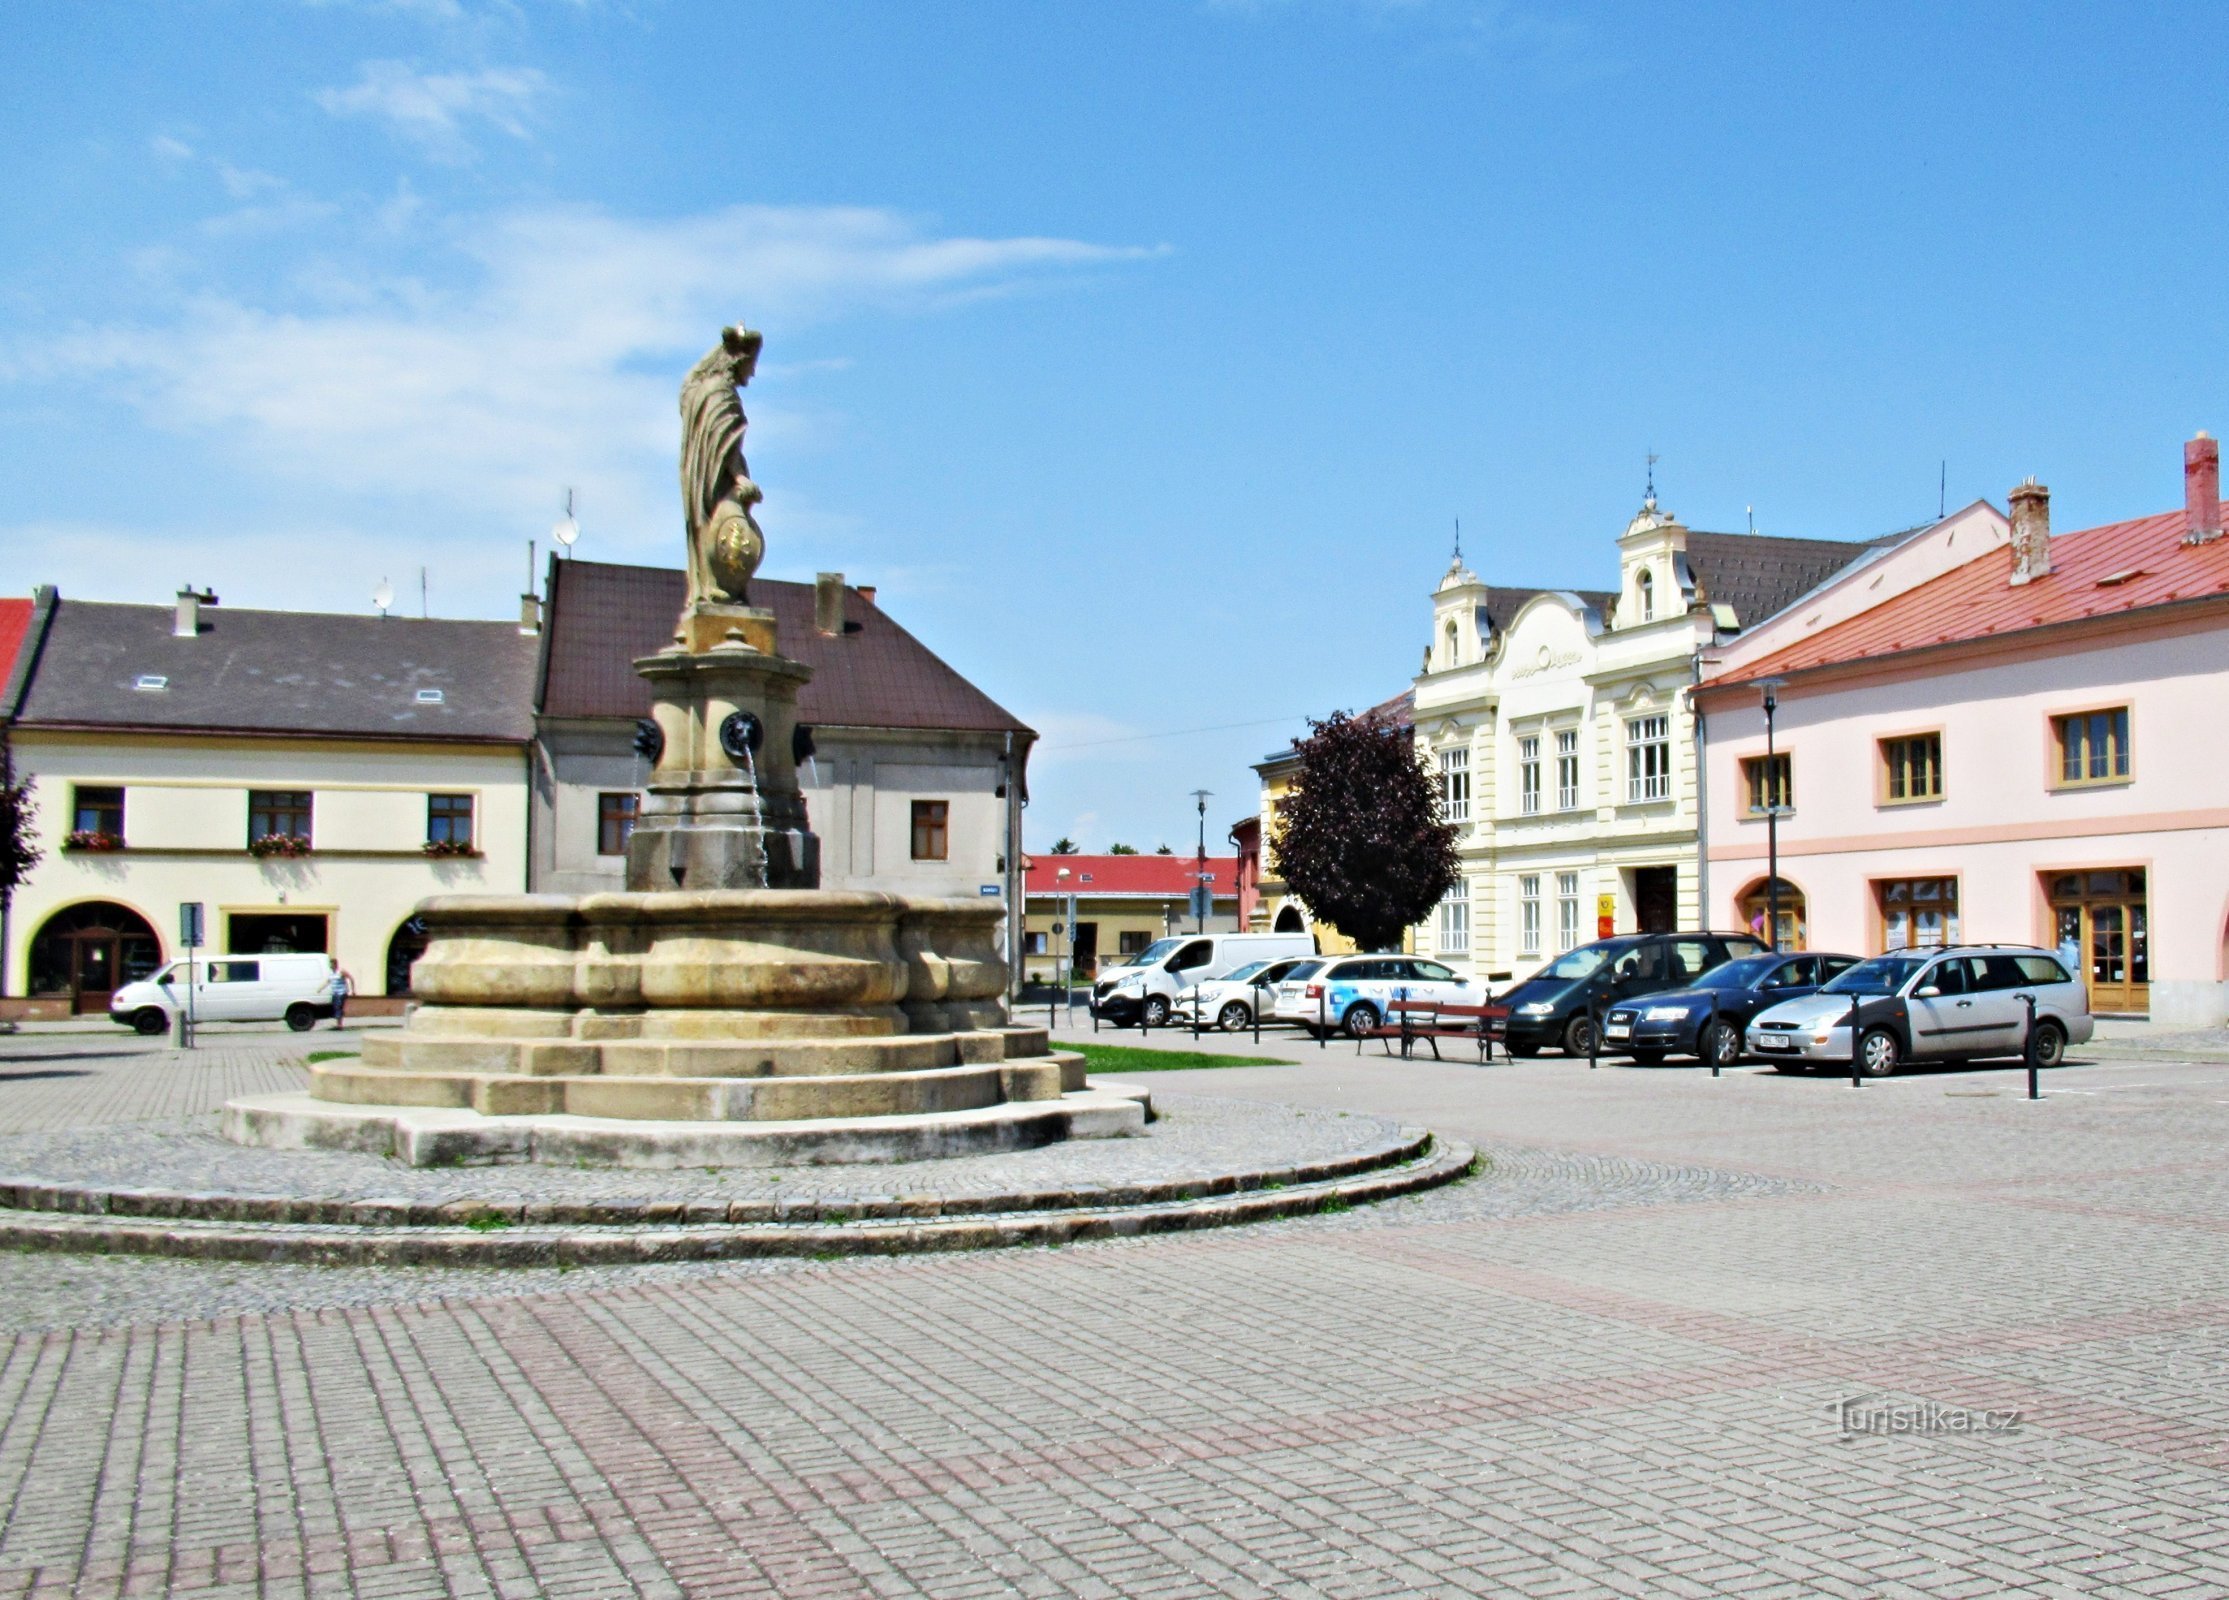 Pentru o plimbare prin orașul Tovačov